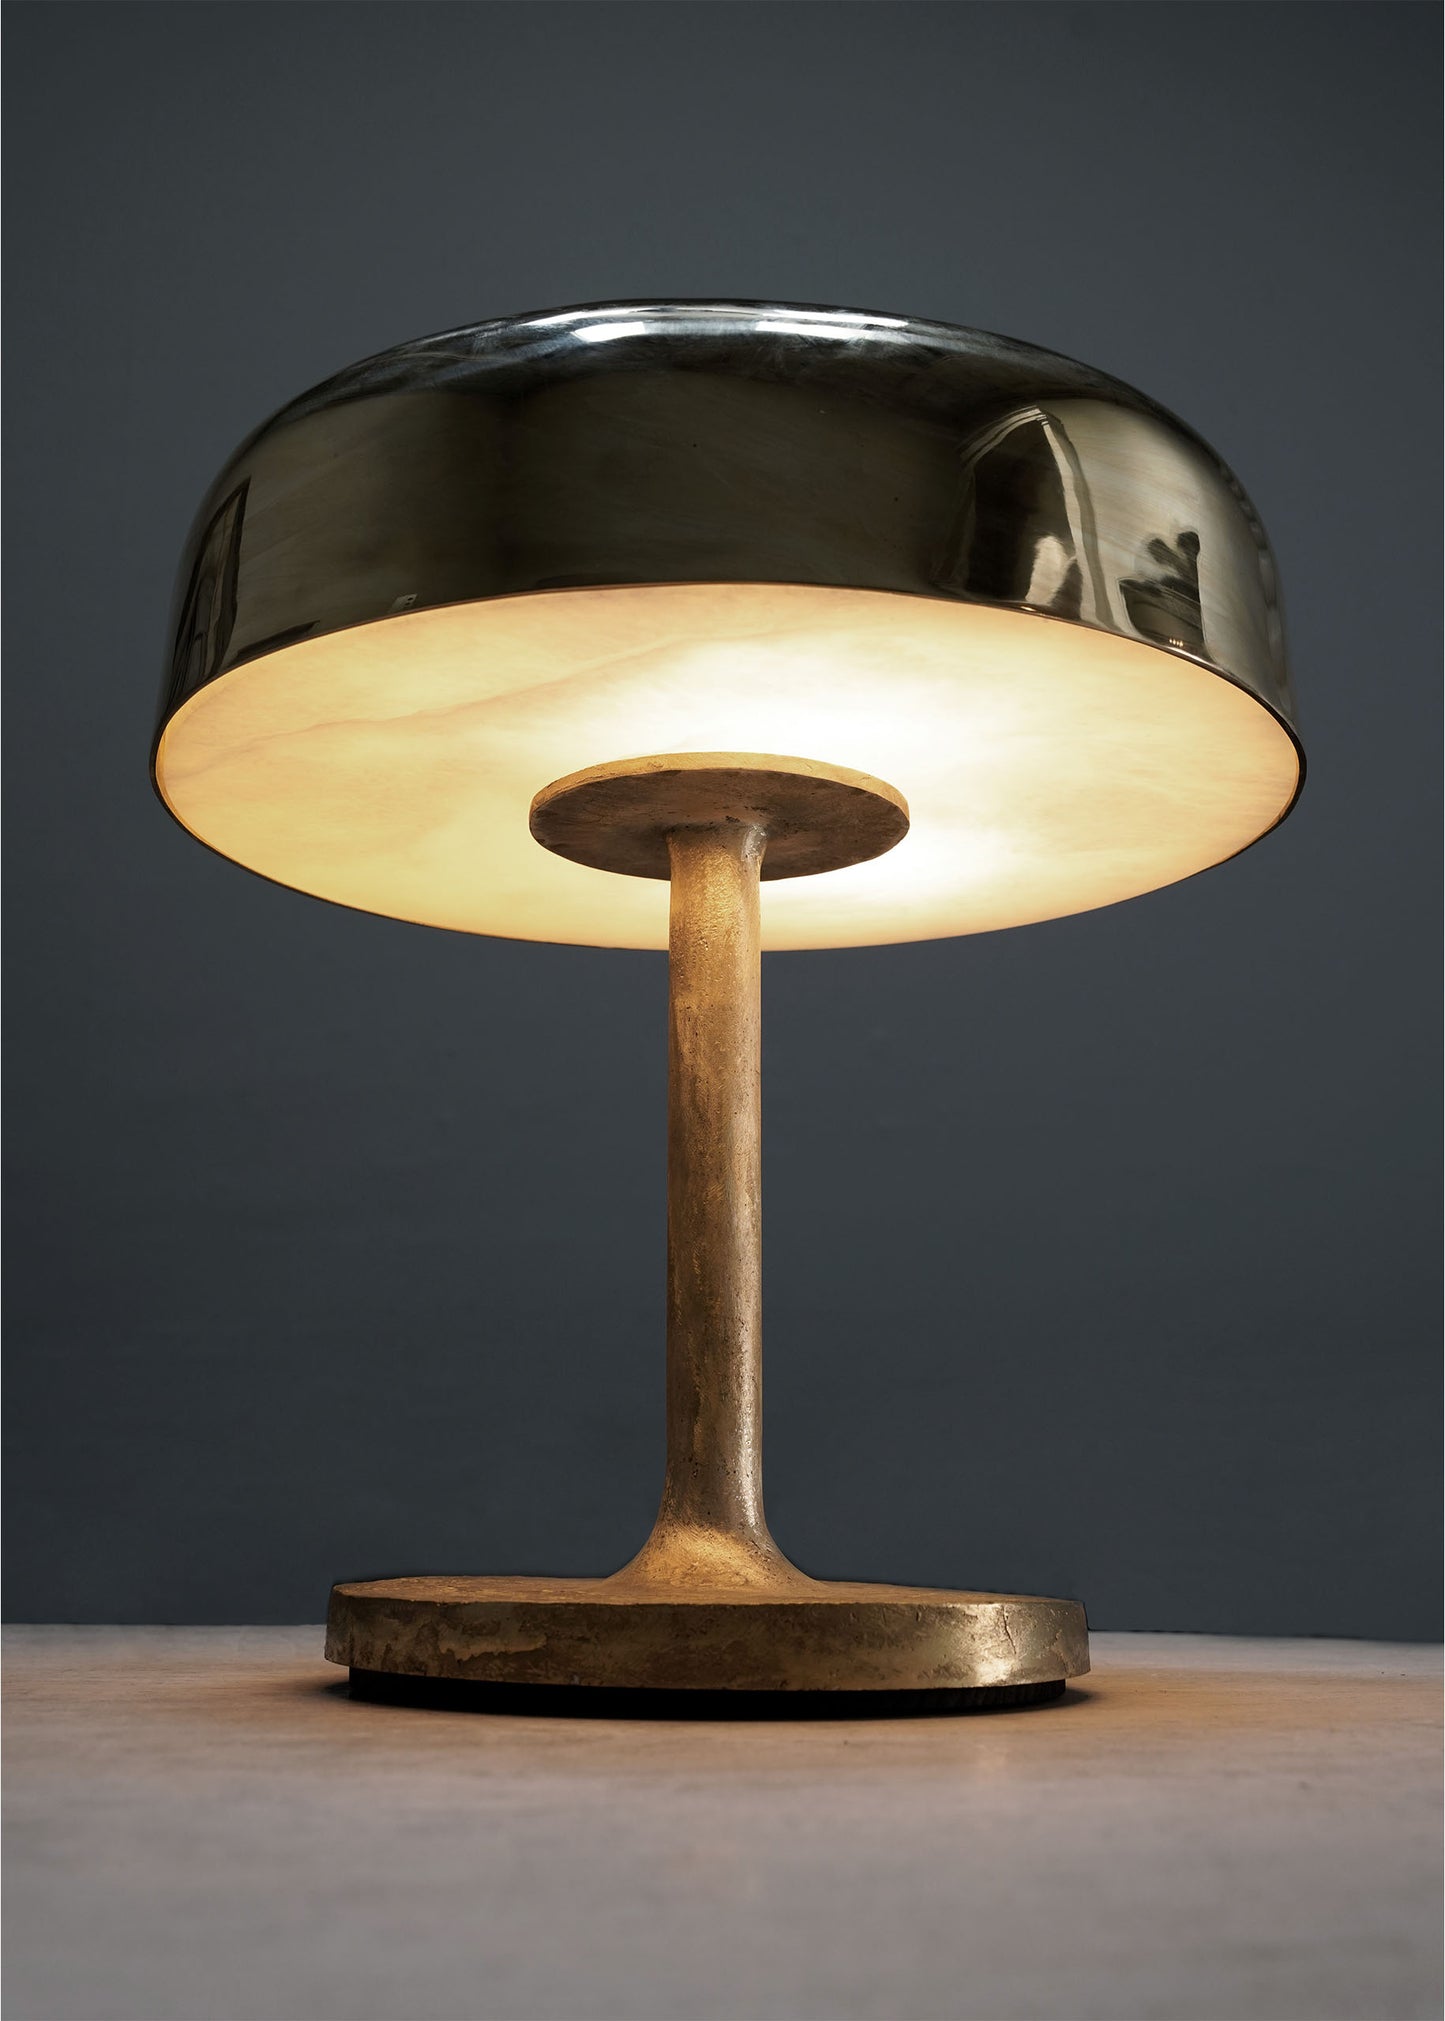 KUPOLI TABLE LAMP IN BRASS BY MICHAËL VERHEYDEN